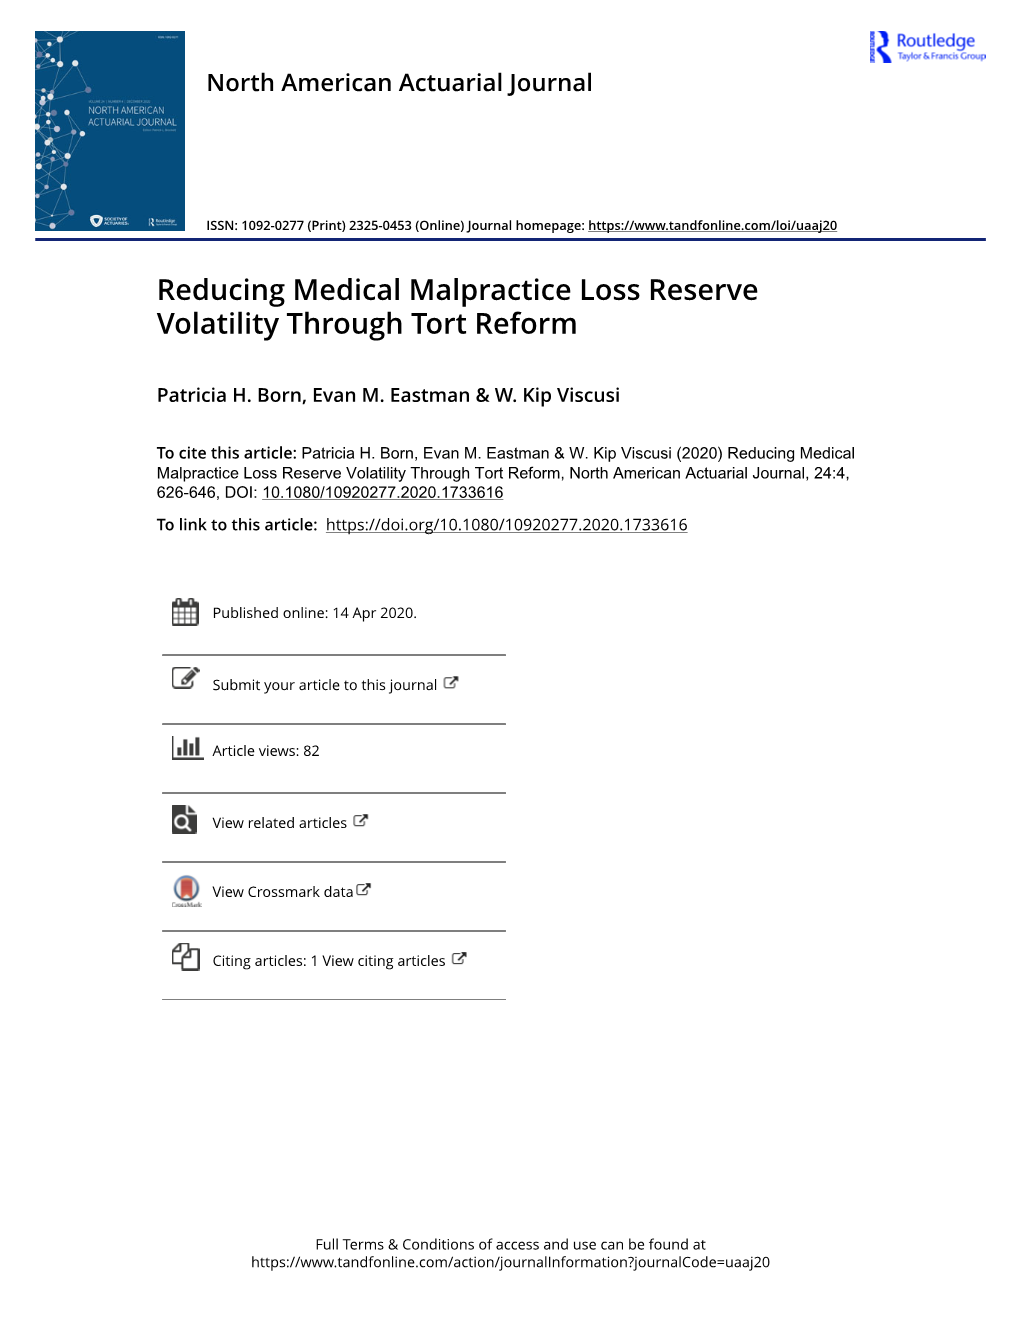 Reducing Medical Malpractice Loss Reserve Volatility Through Tort Reform